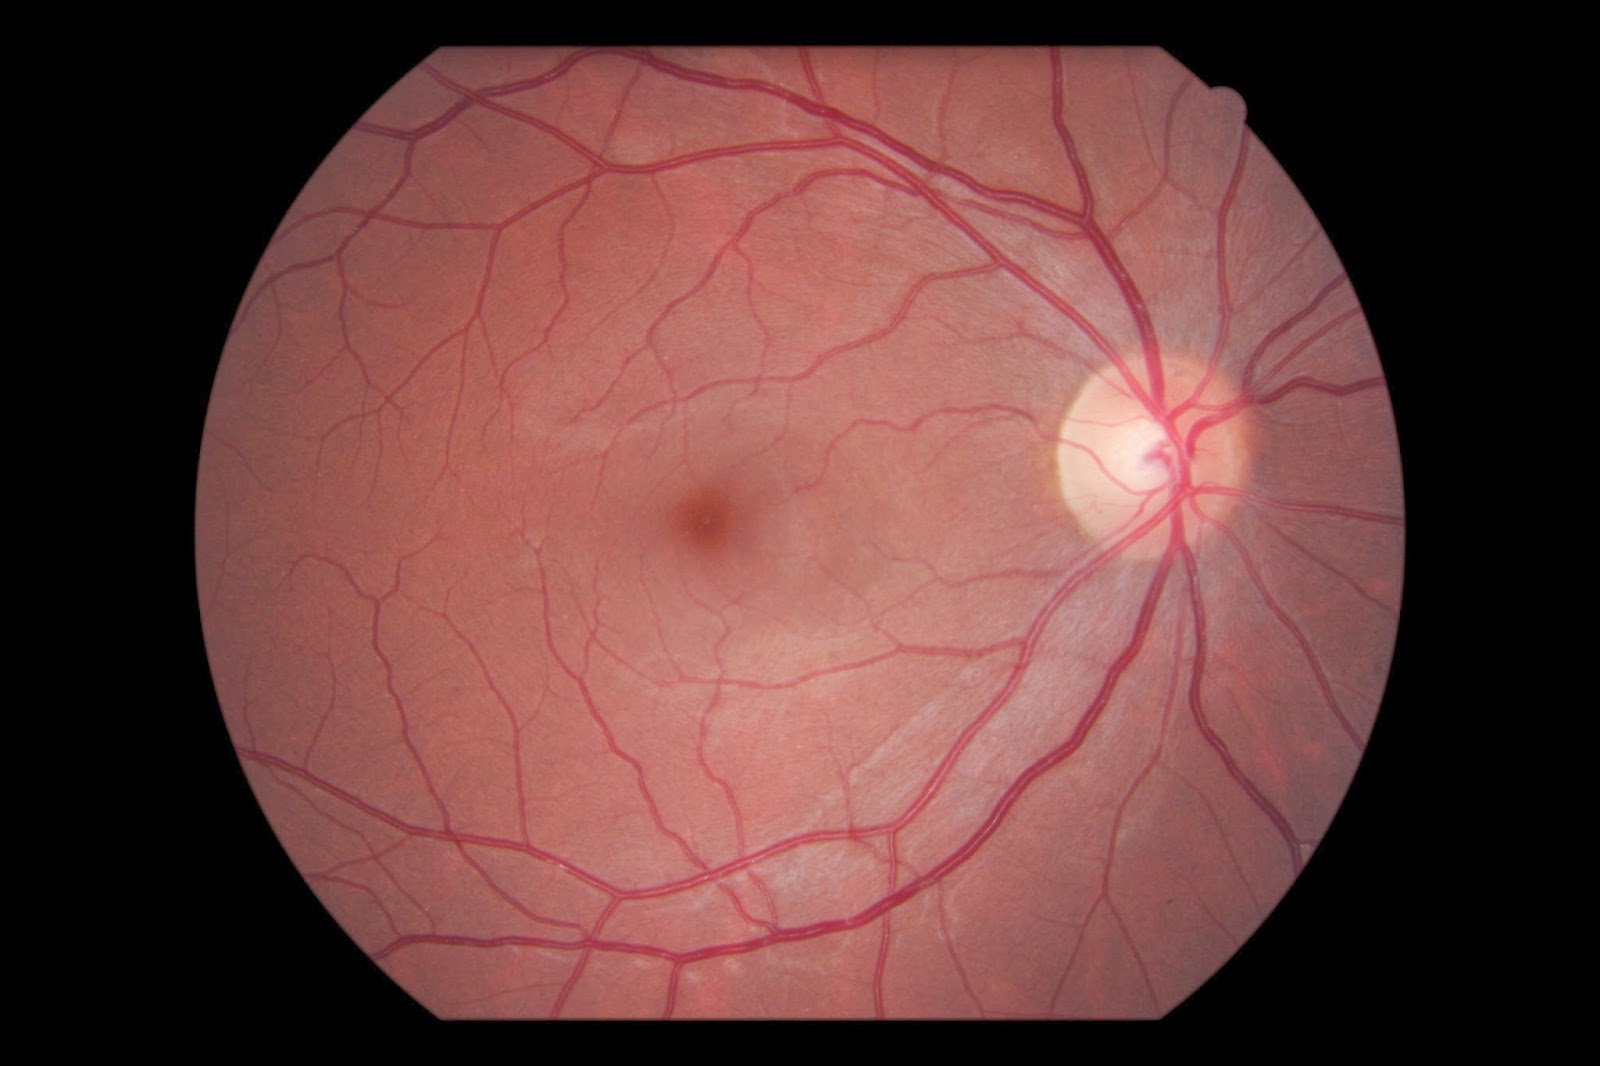 13-astonishing-facts-about-optic-nerve